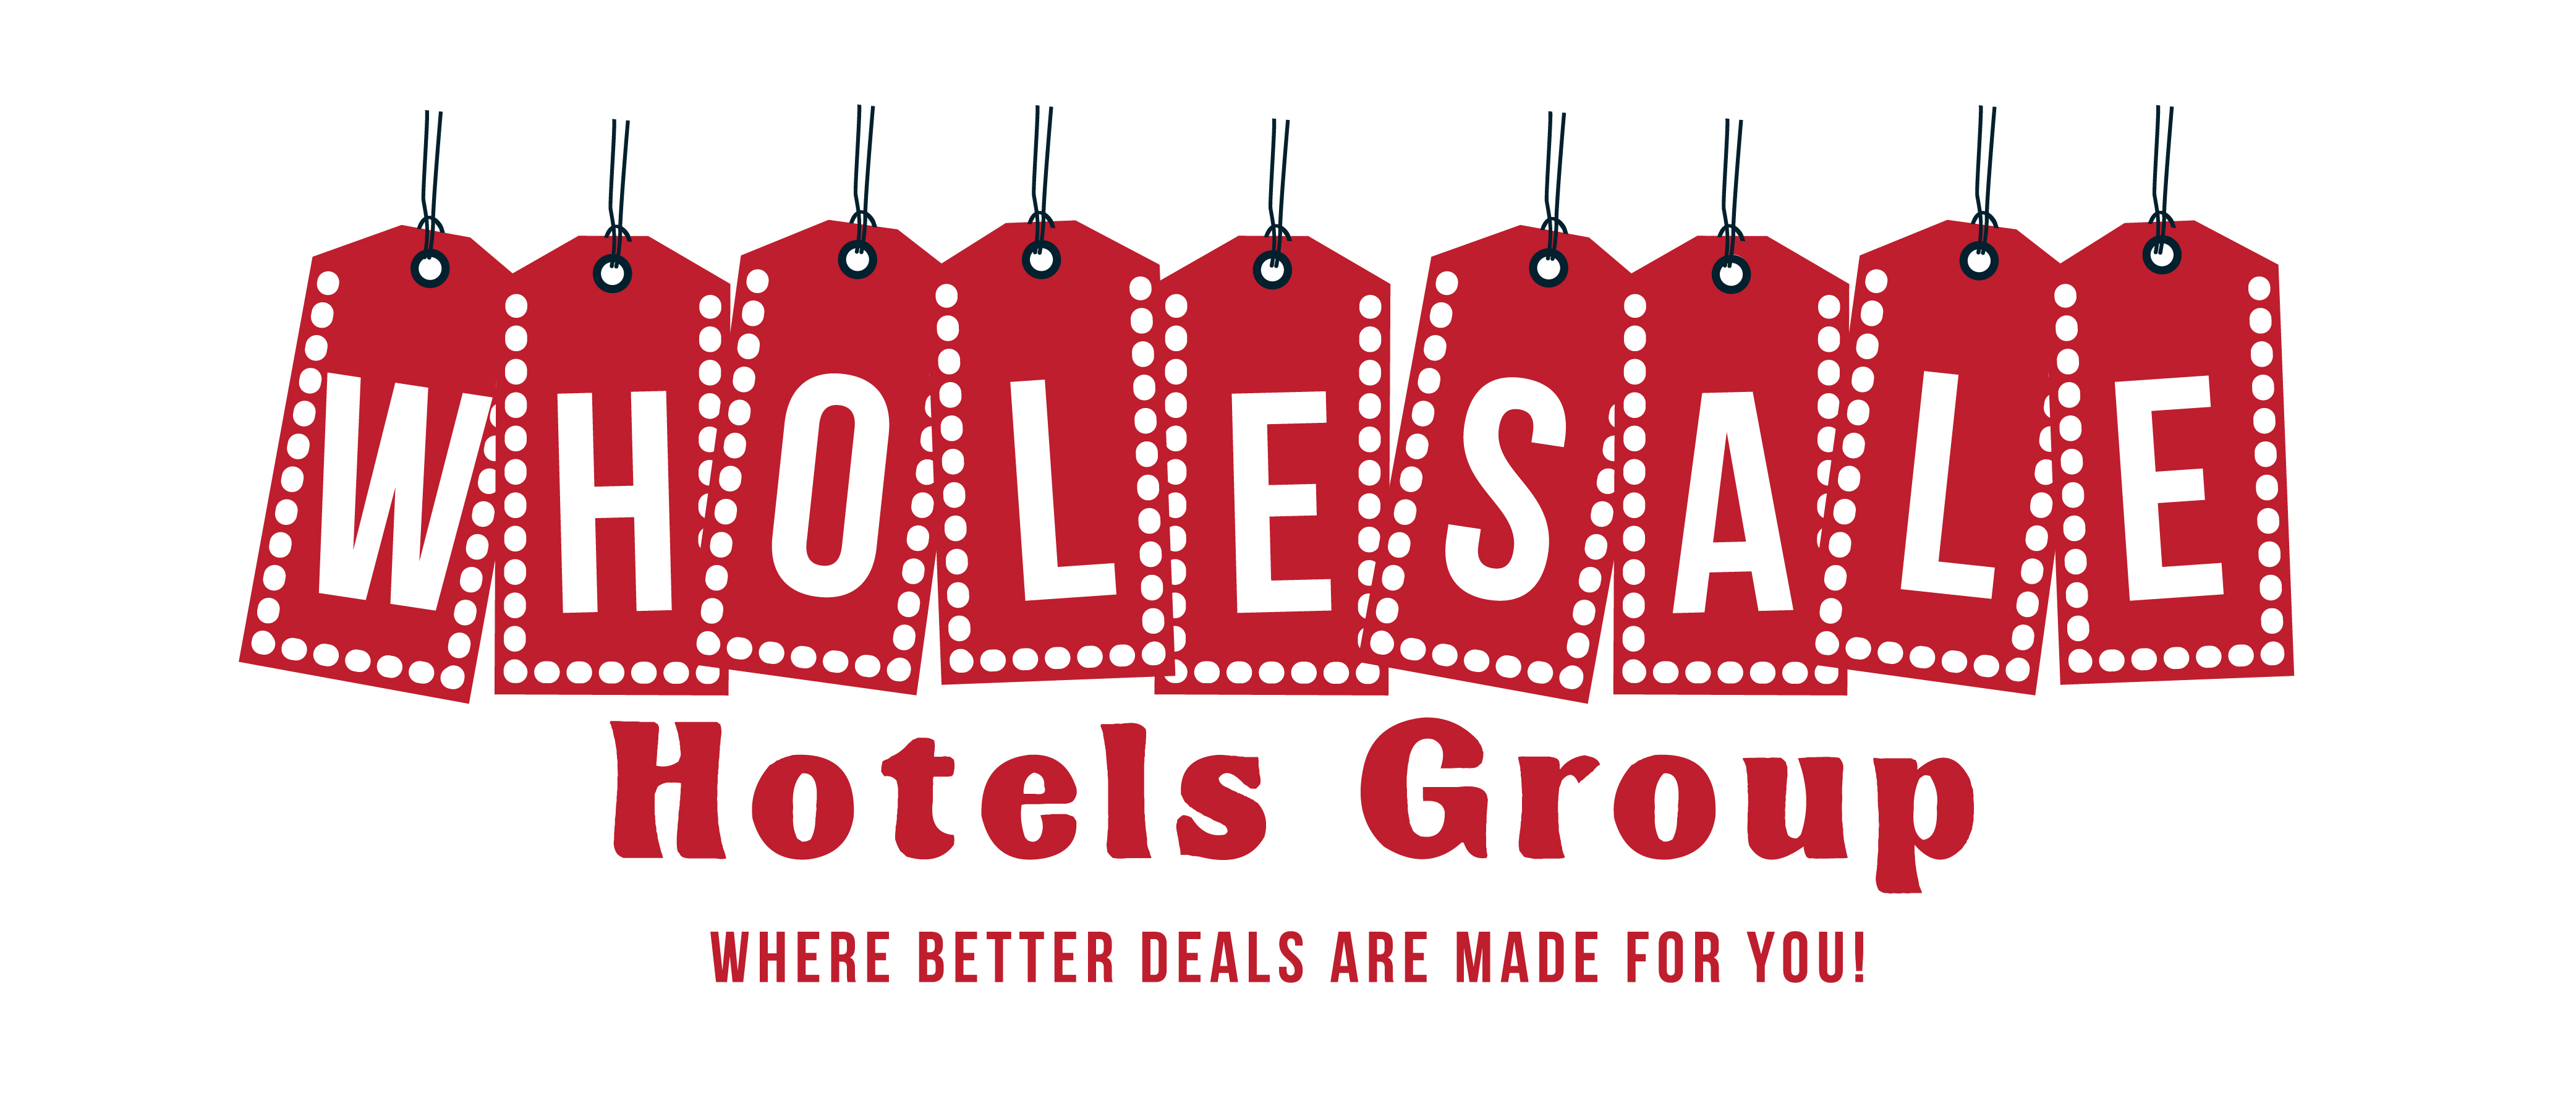 Wholesale Hotels Group - Your hotel wholesaler